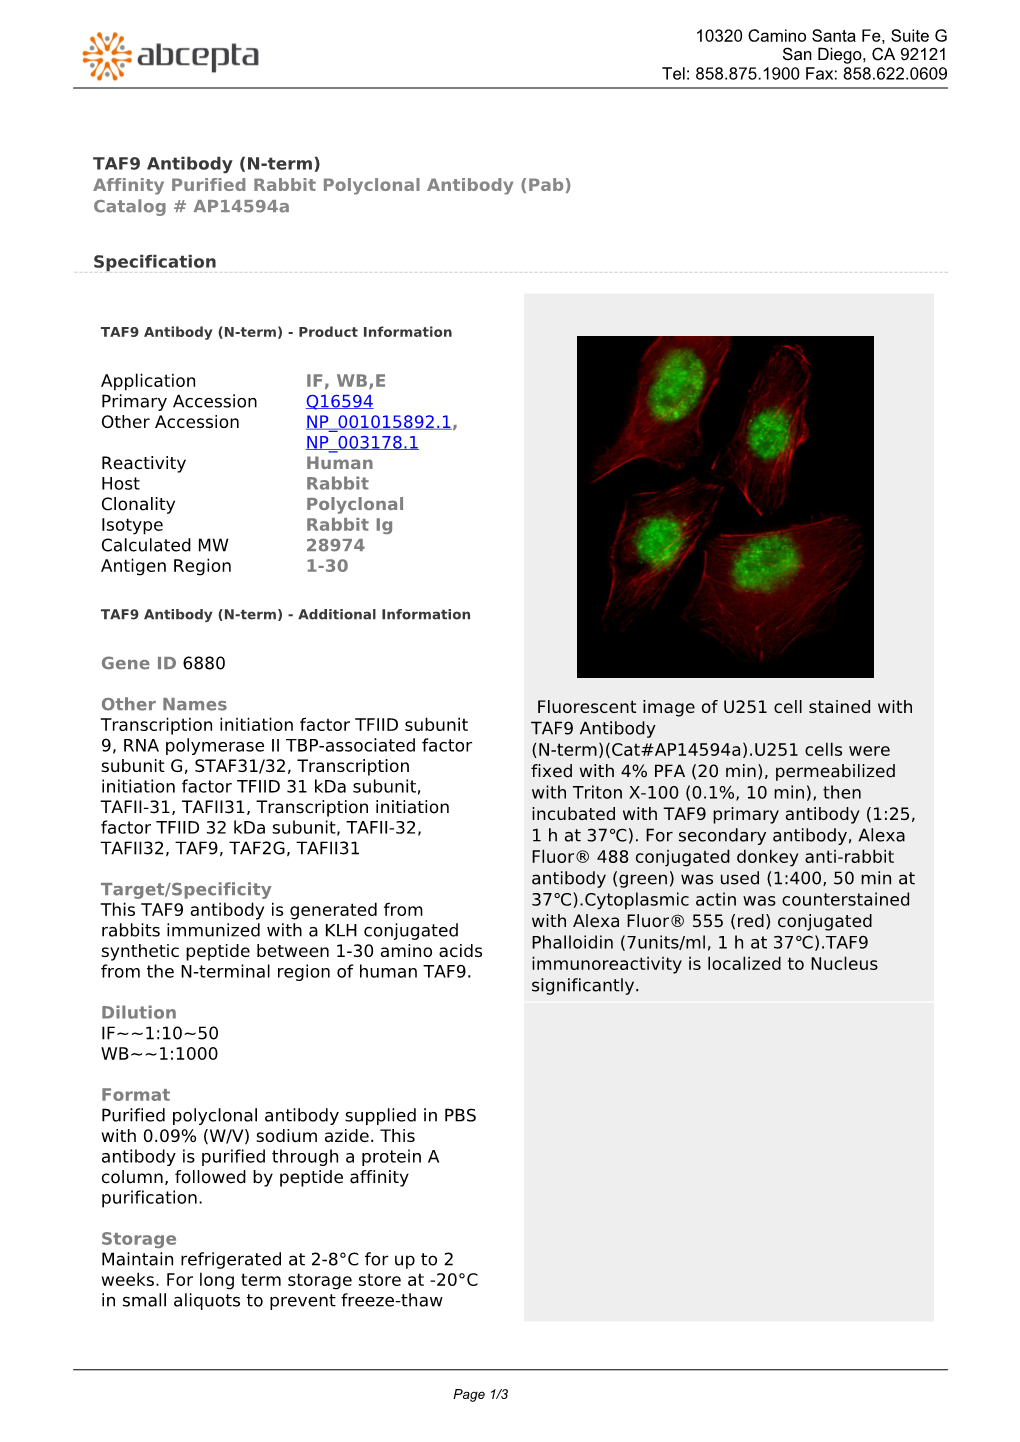 TAF9 Antibody (N-Term) Affinity Purified Rabbit Polyclonal Antibody (Pab) Catalog # Ap14594a